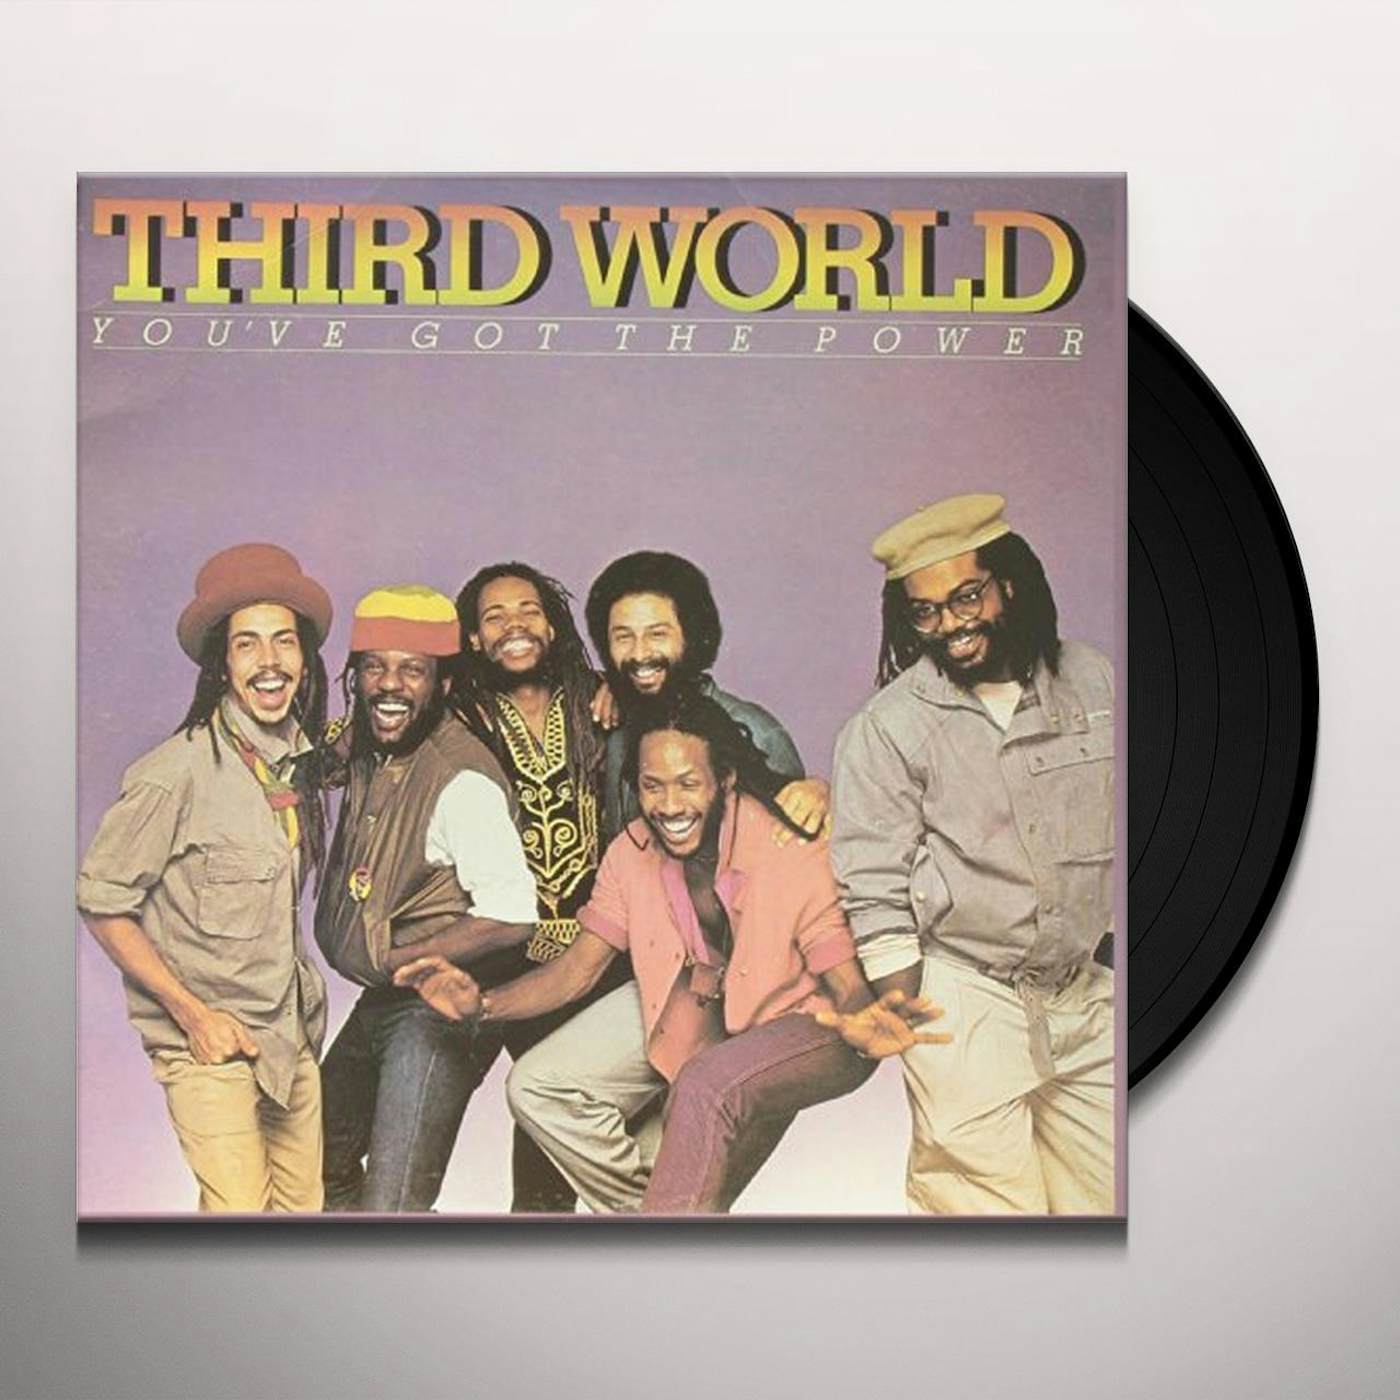 Third World You've Got The Power Vinyl Record